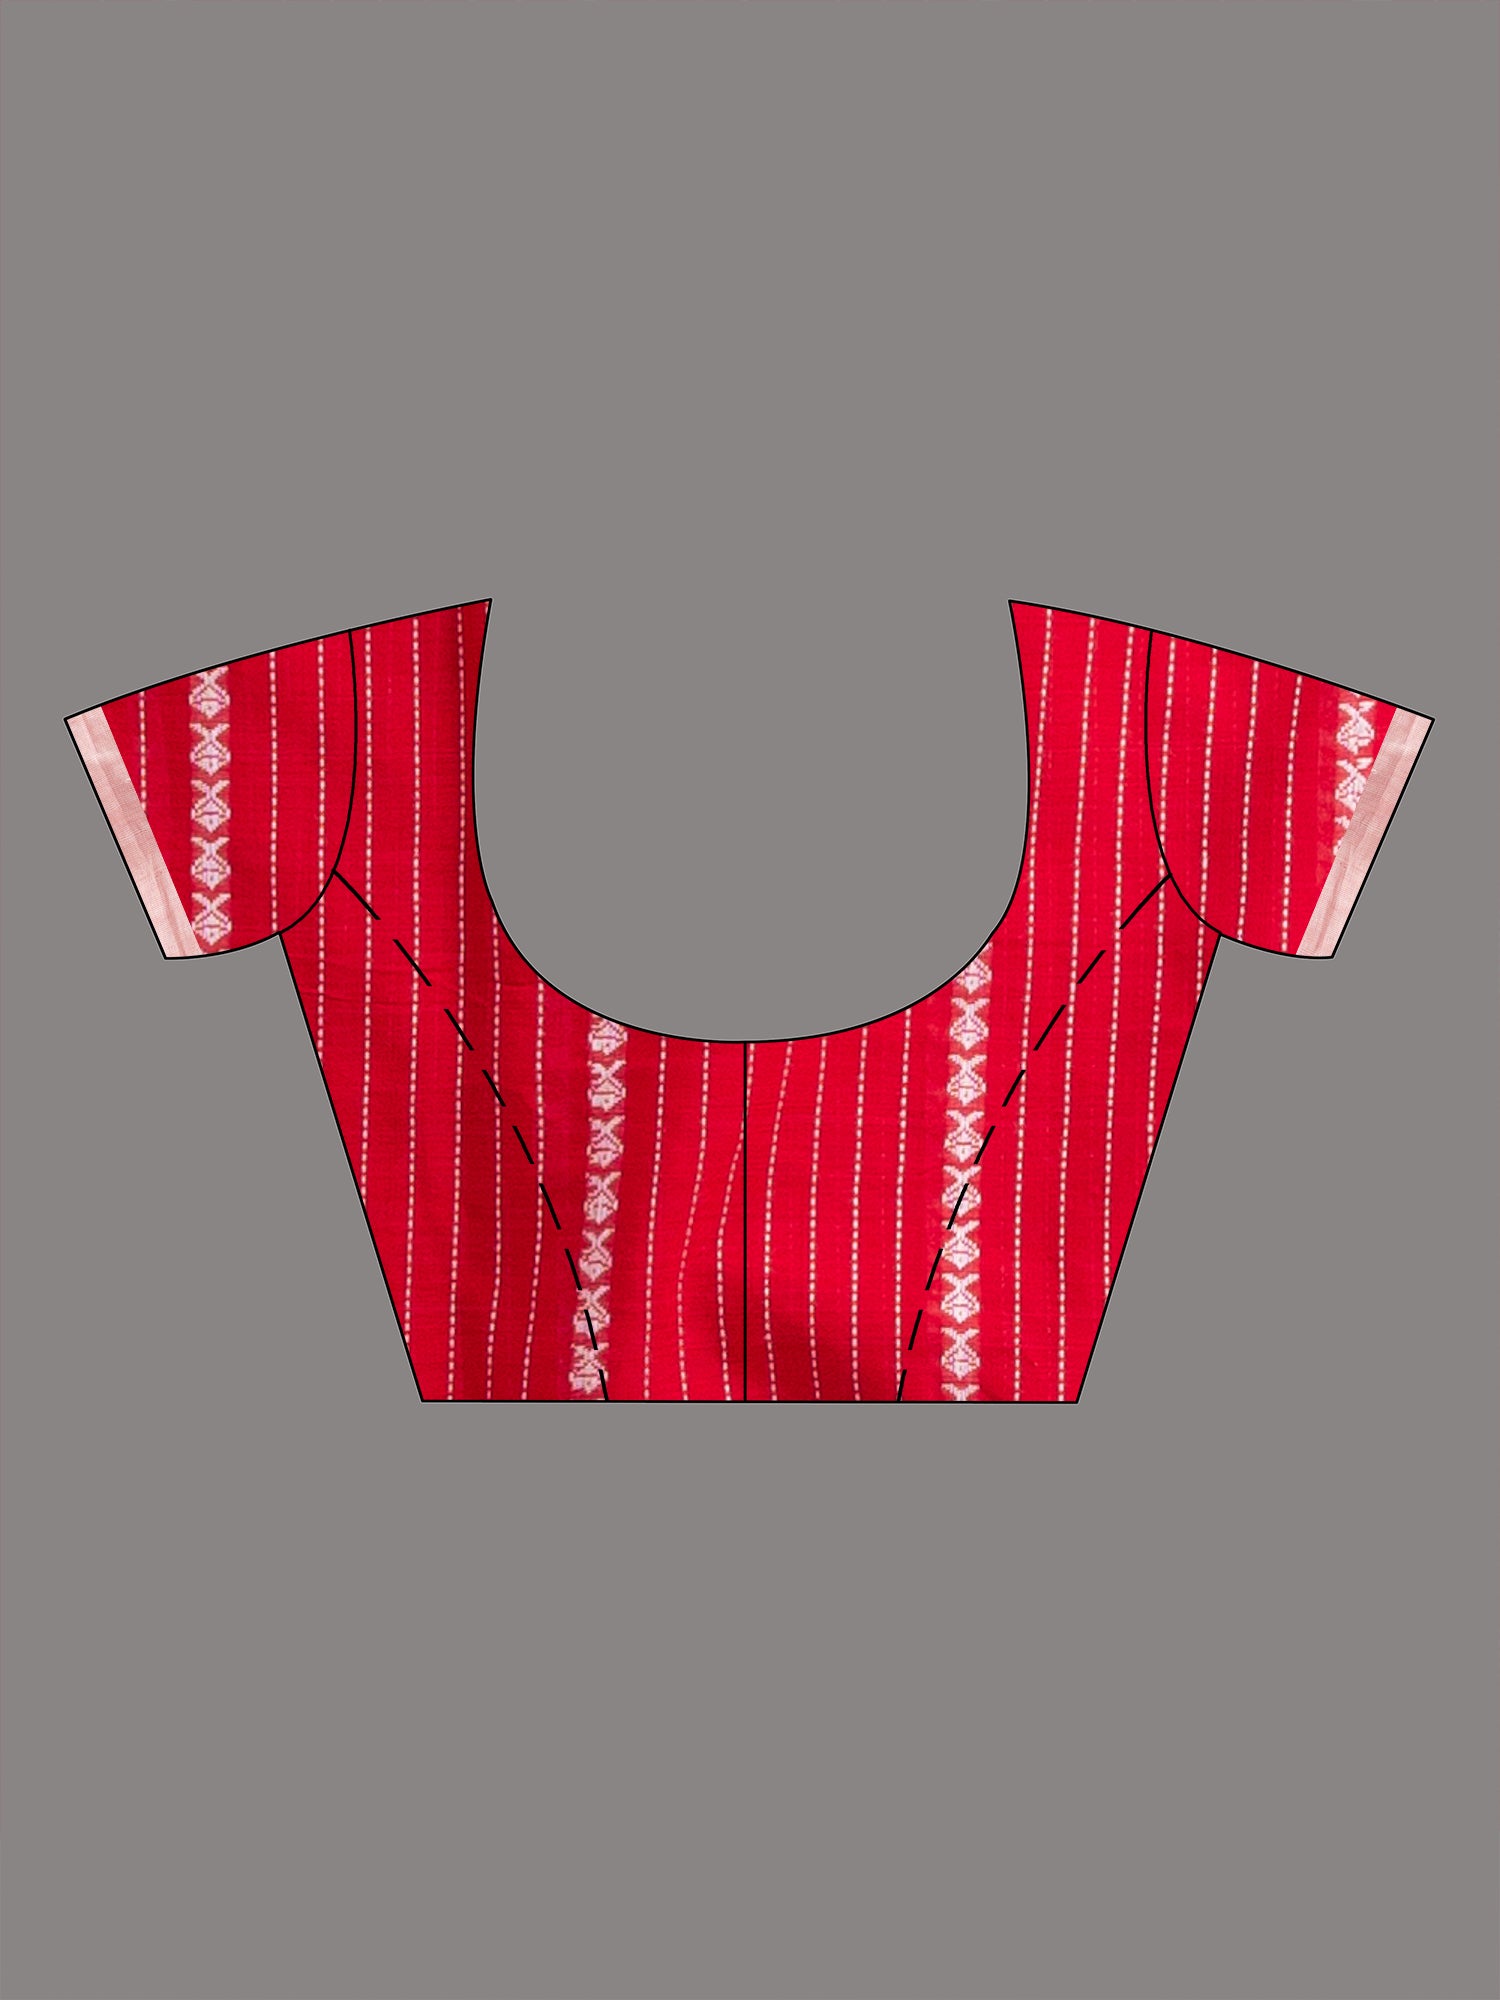 Women's Red all body small fish design with fish design pallu in solid border handwoven cotton saree - Angoshobha